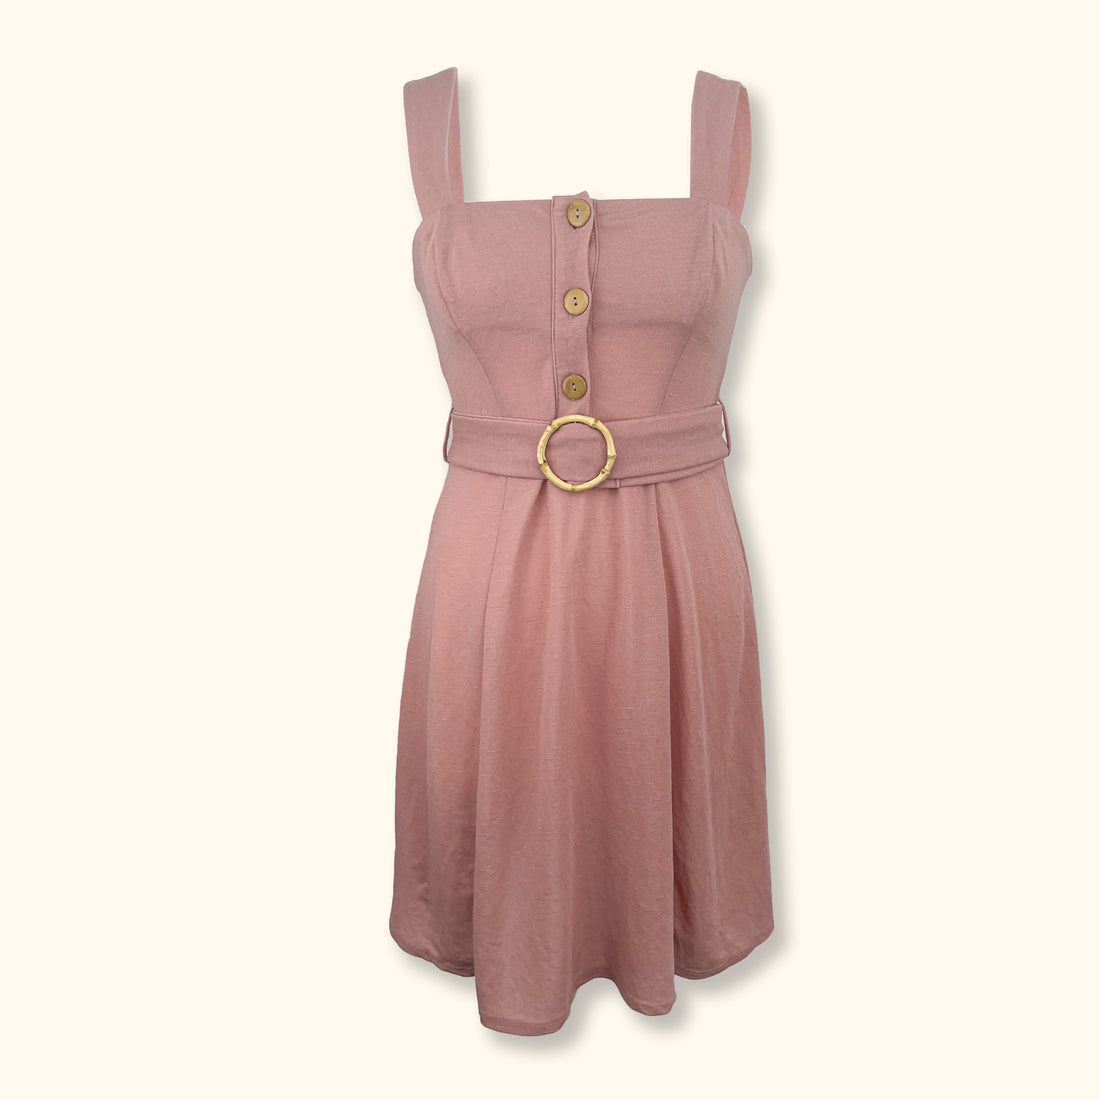 Topshop Pink Sleeveless Mini Dress with Belt - Size 10 - Topshop - Dresses